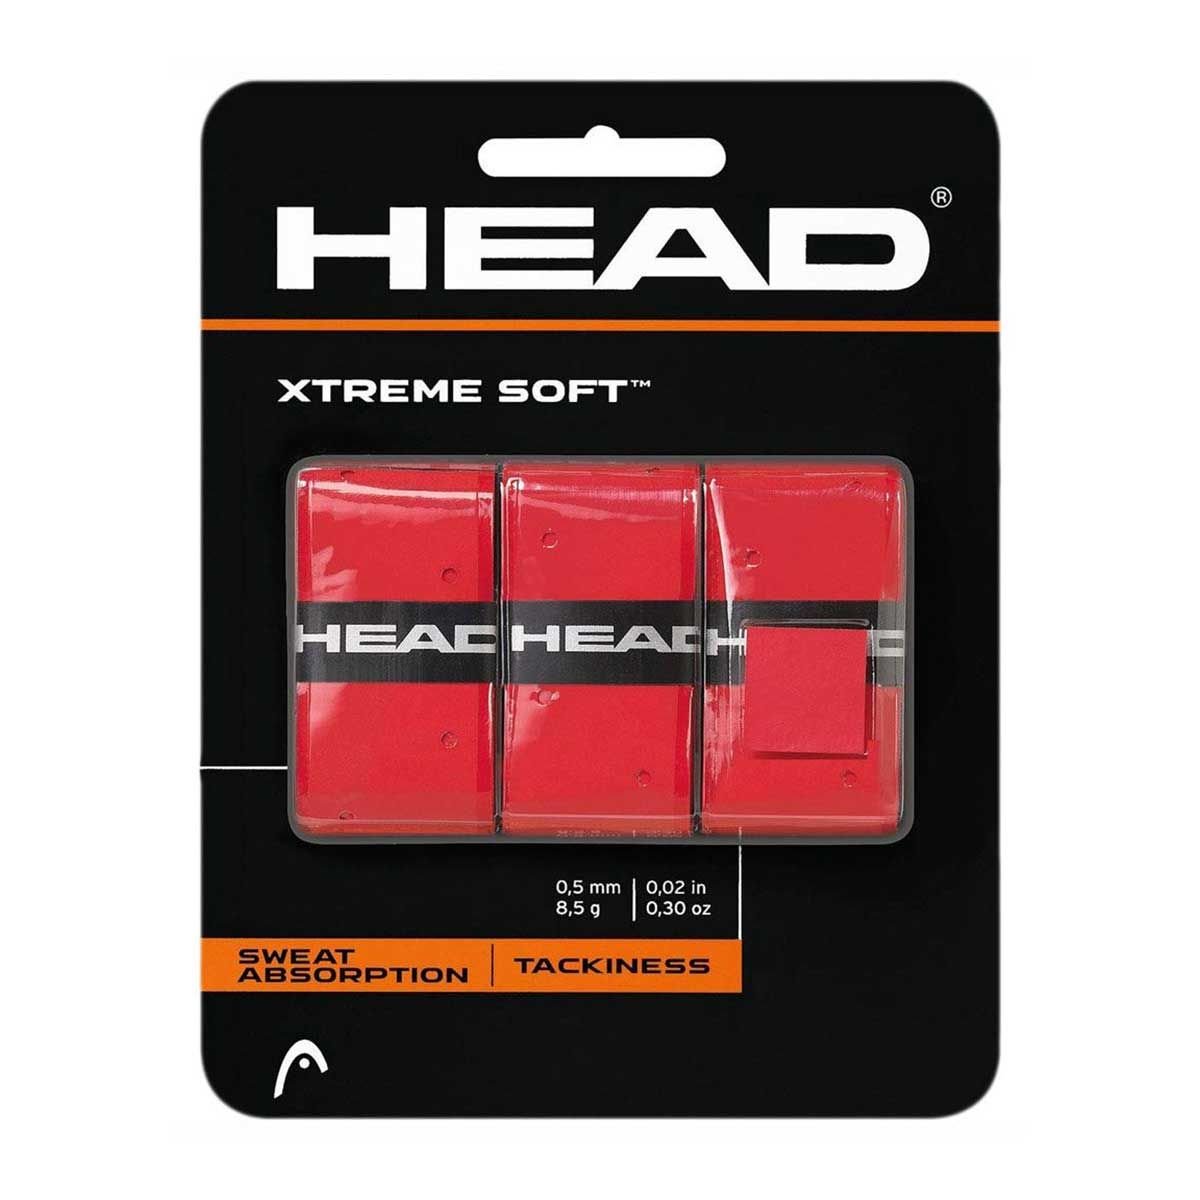 HEAD XTREME SOFT OVER GRIP (BLACK) - Set of 3